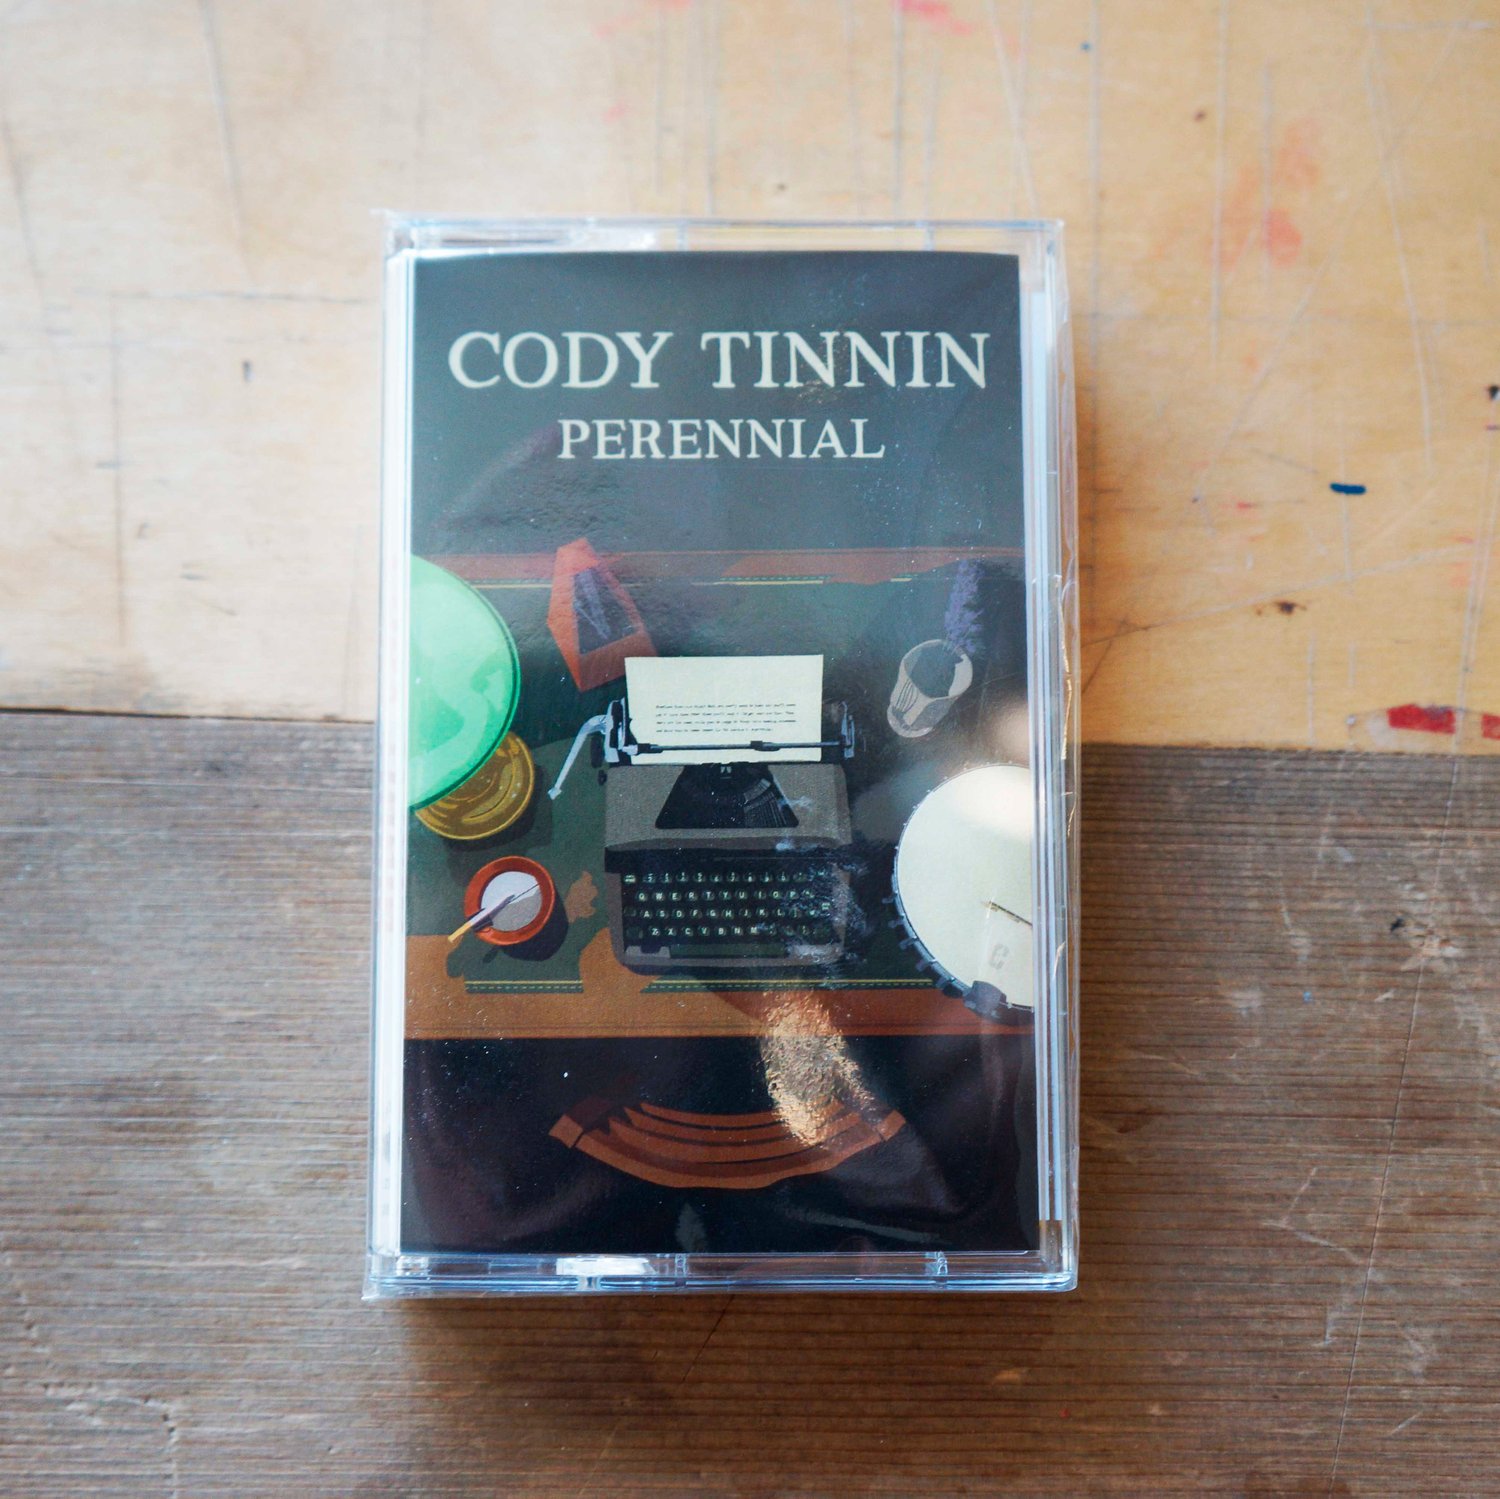 "Perennial" by Cody Tinnin